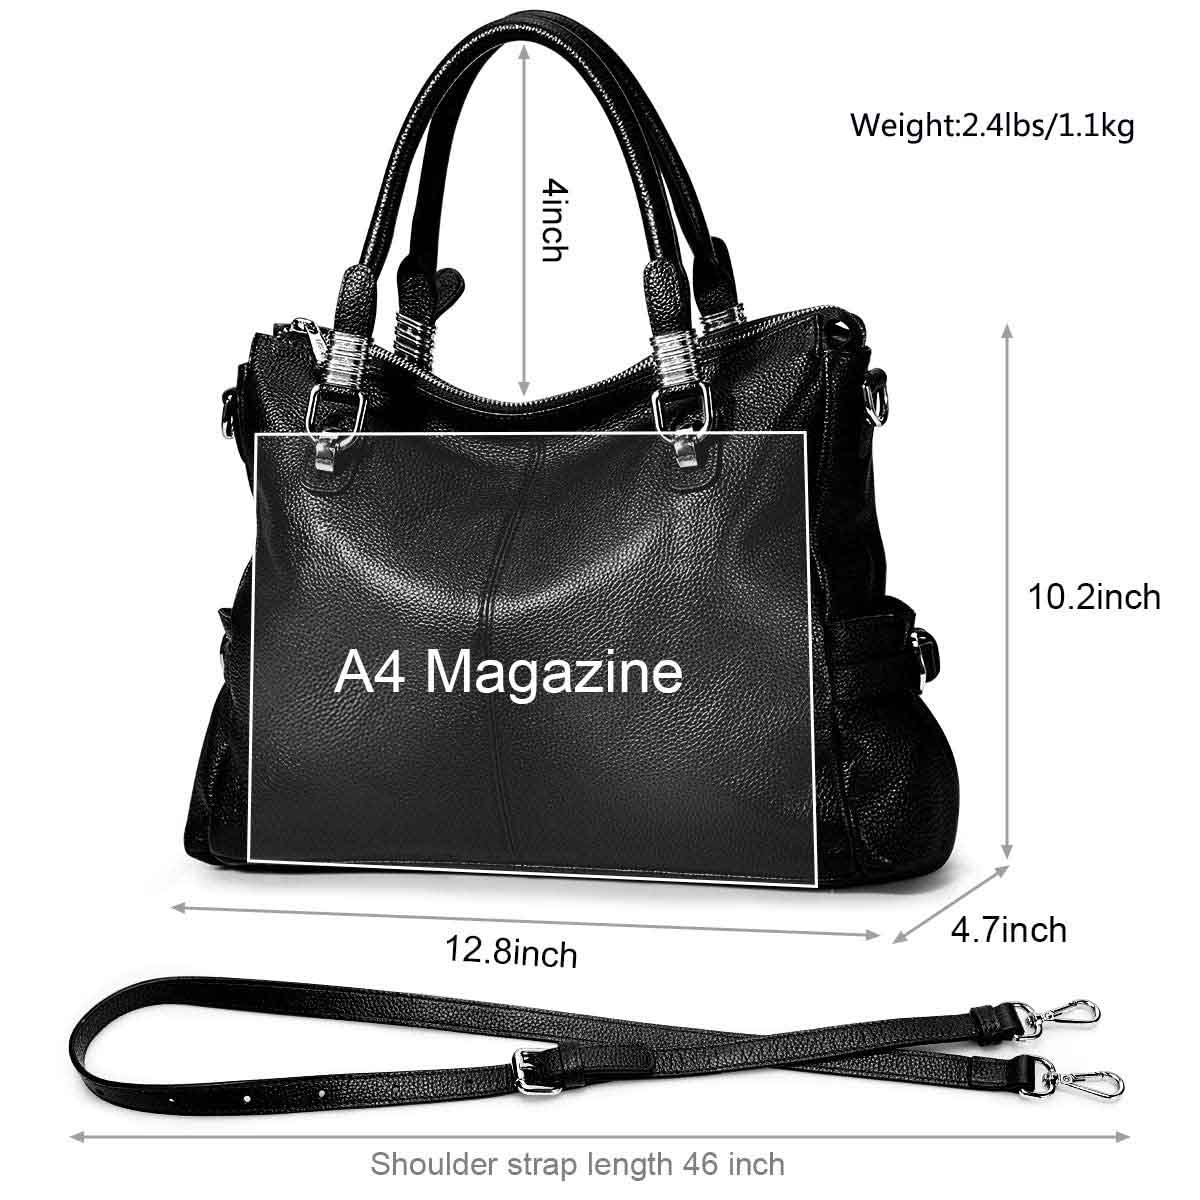 women's leather handbag